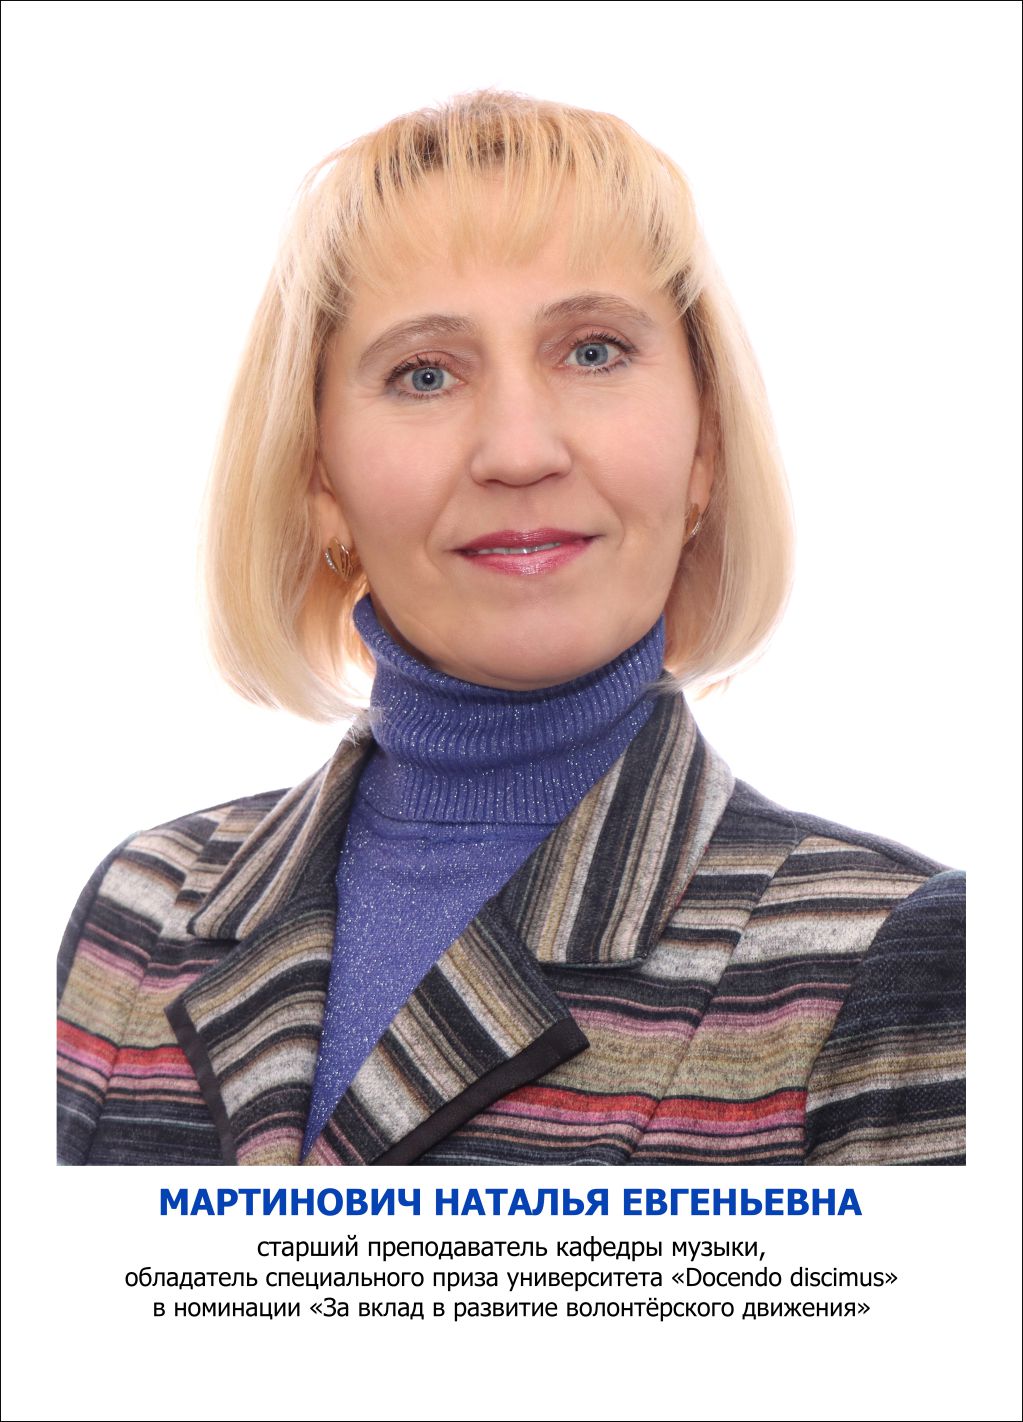 Мартинович Наталья Евгеньевна